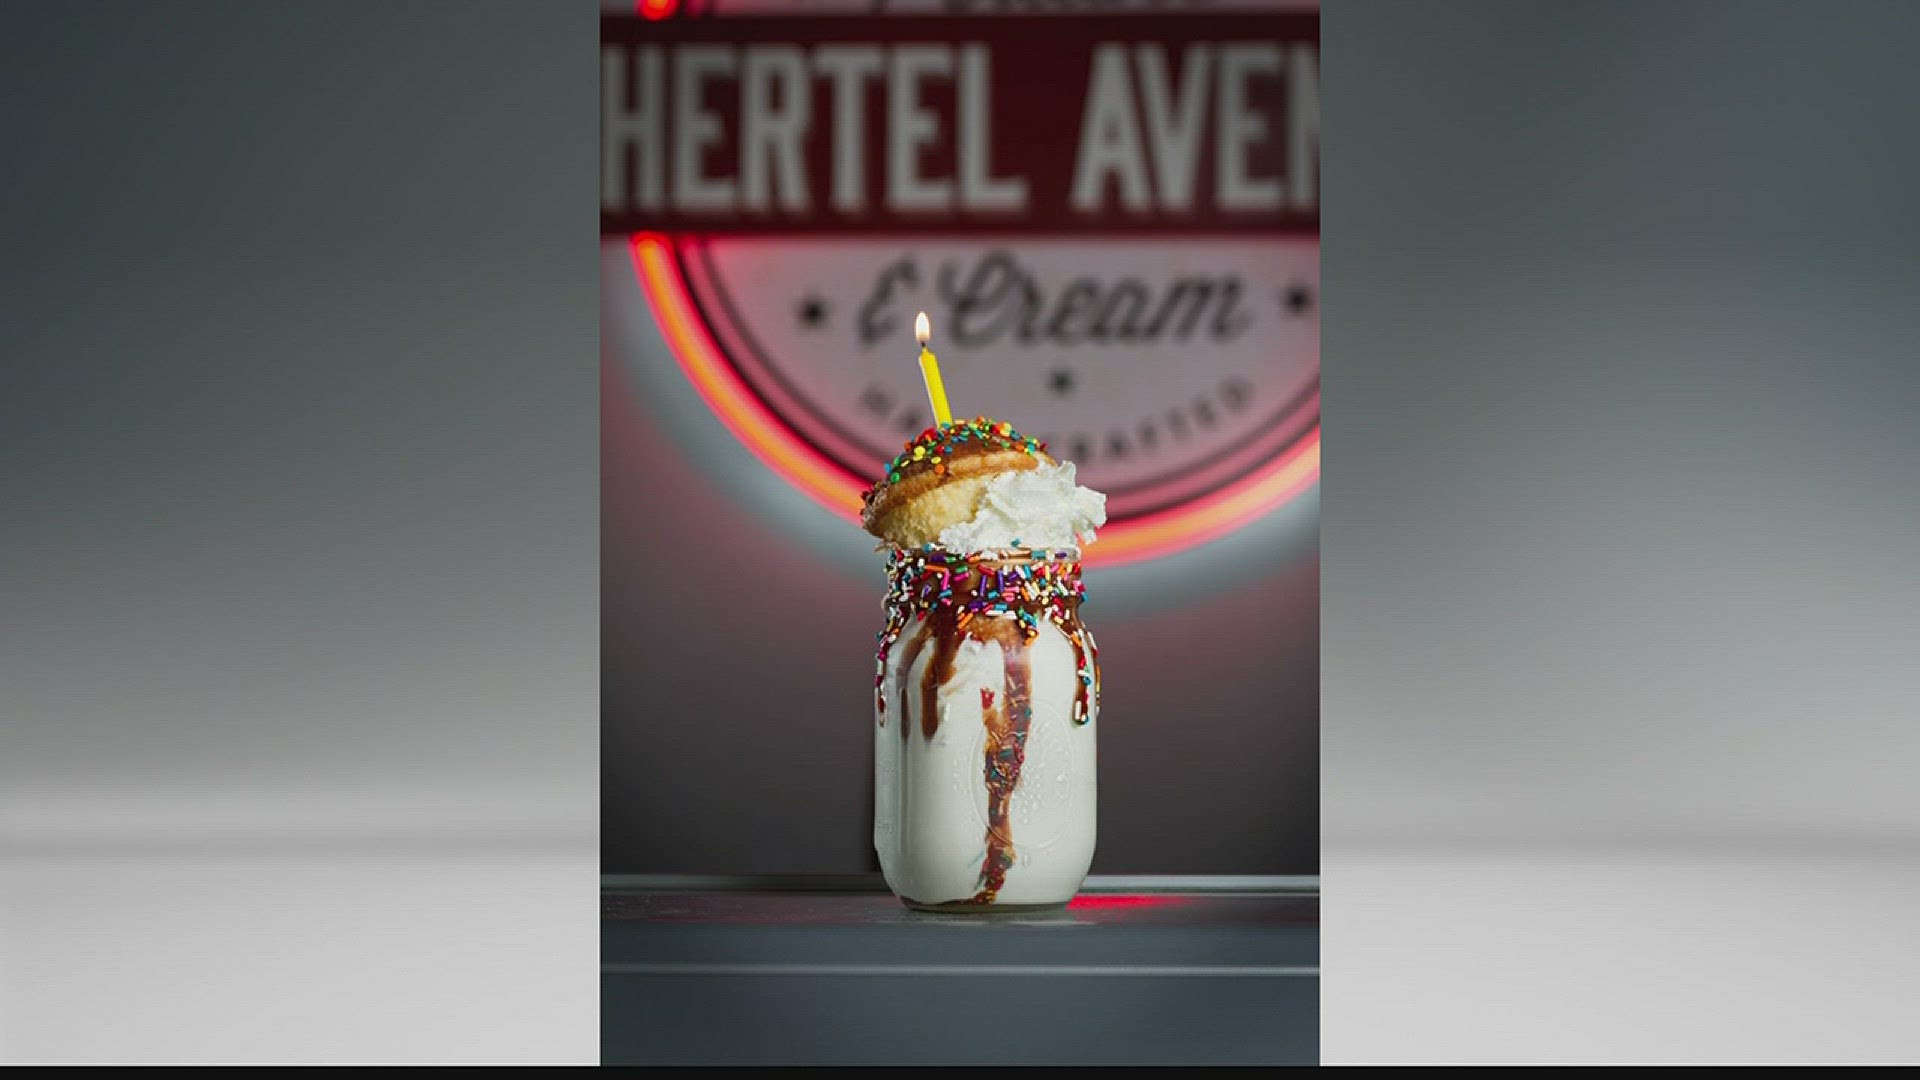 Hertel Avenue Poutine & Cream to open next week